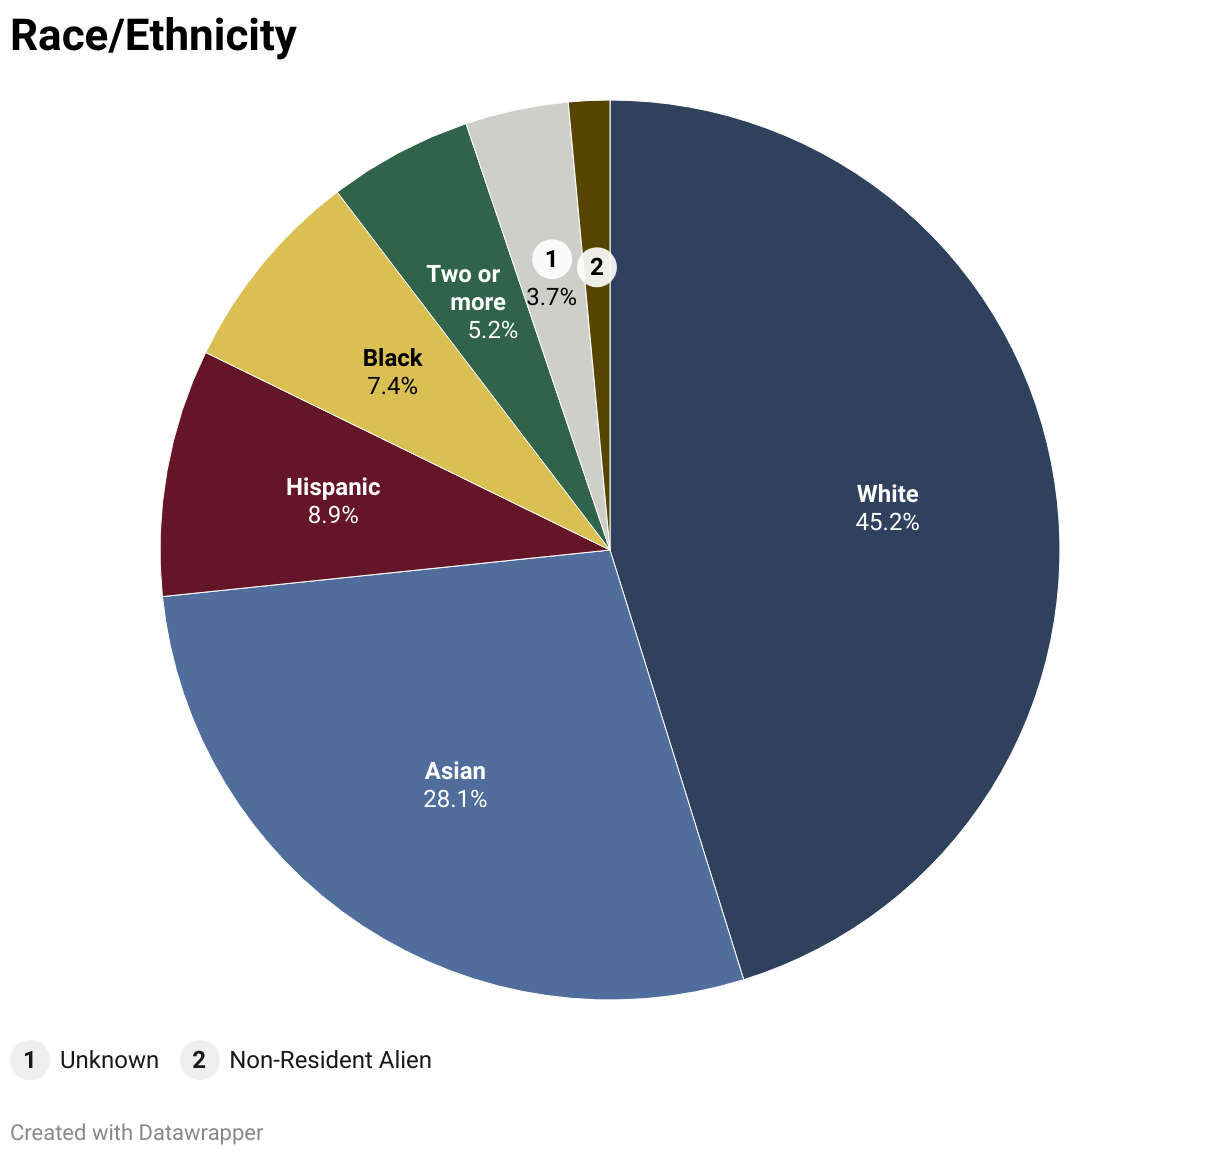 28.14% Asian, 7.40% Black, 8.88% Hispanic, 5.18% Two or more, 1.48% Non-resident alien, 3.70% unknown, 45.18% white